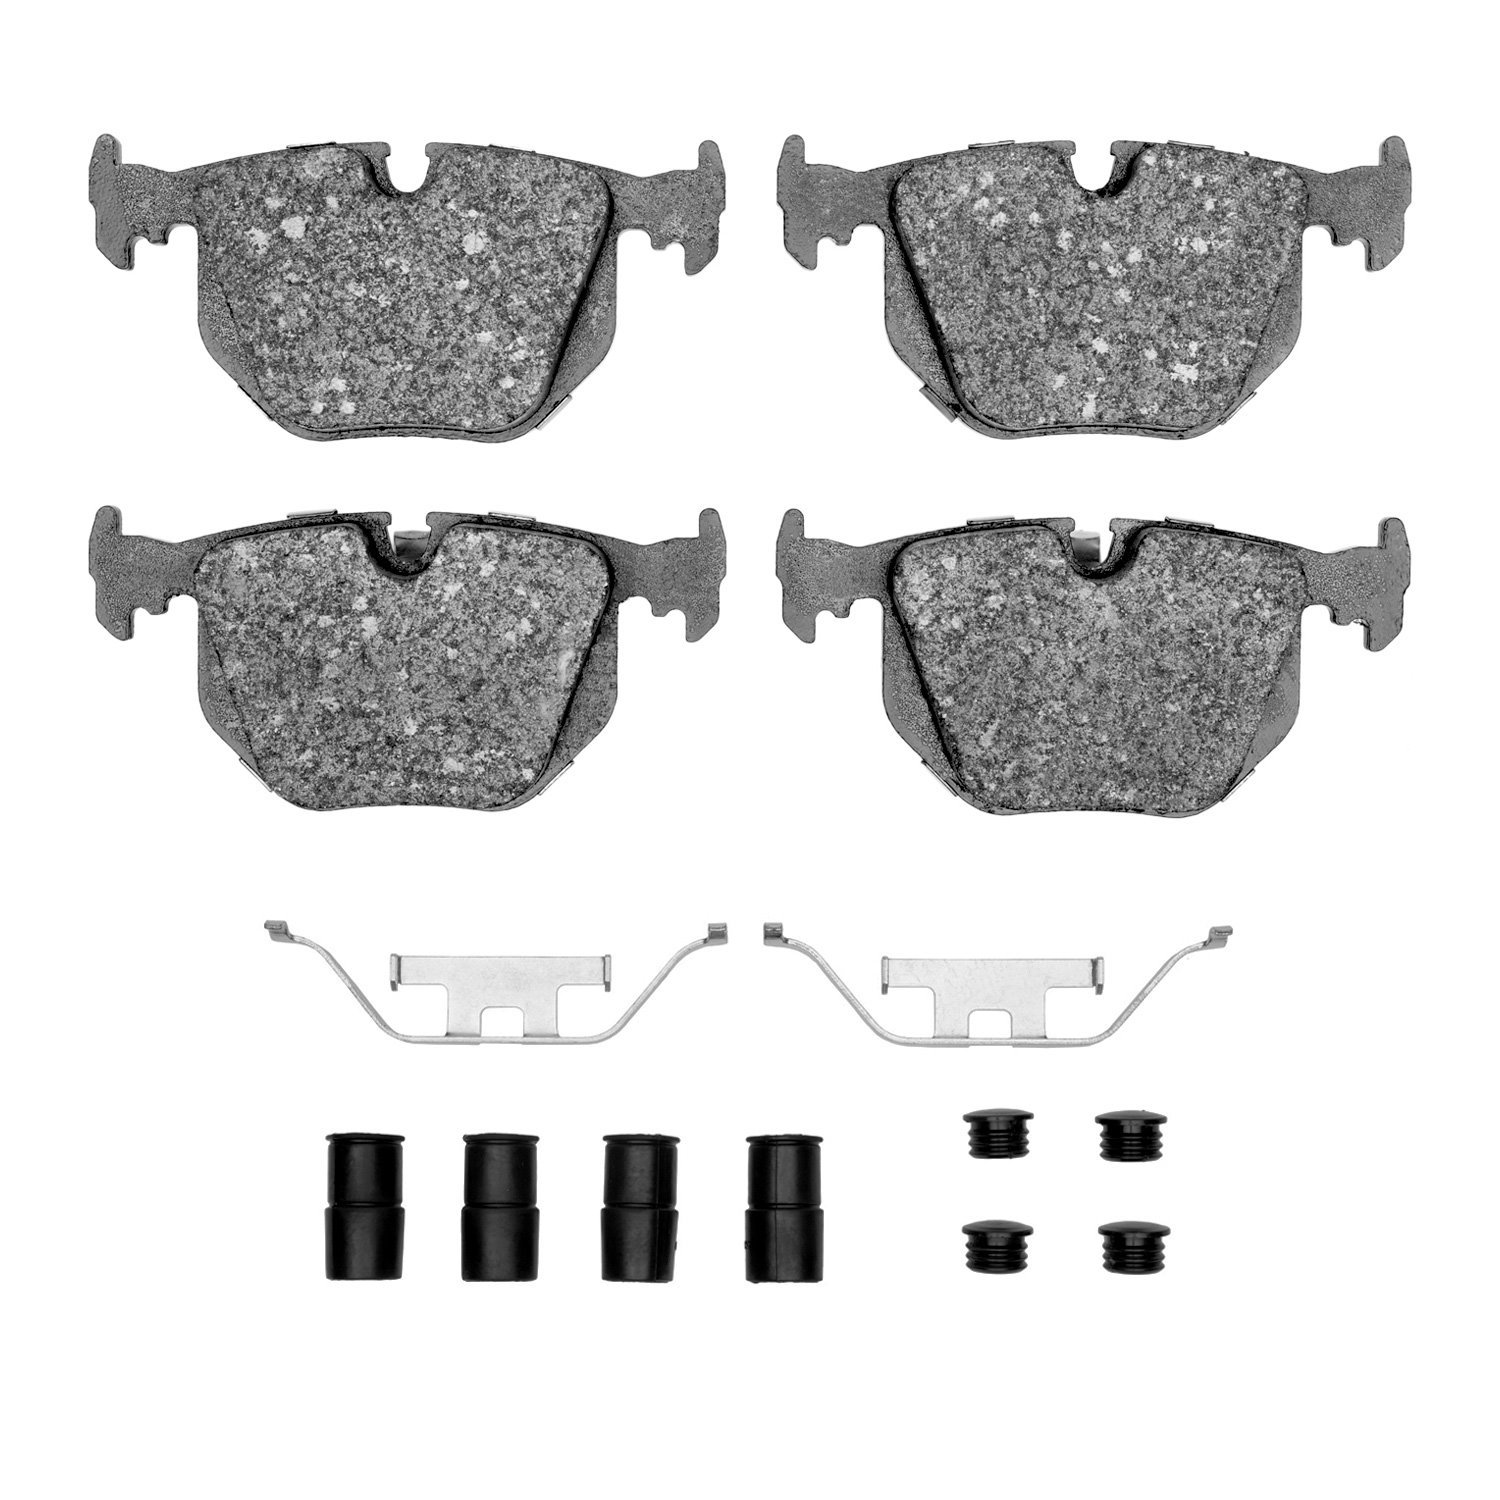 Euro Ceramic Brake Pads & Hardware Kit, 1991-2010 Fits Multiple Makes/Models, Position: Rear